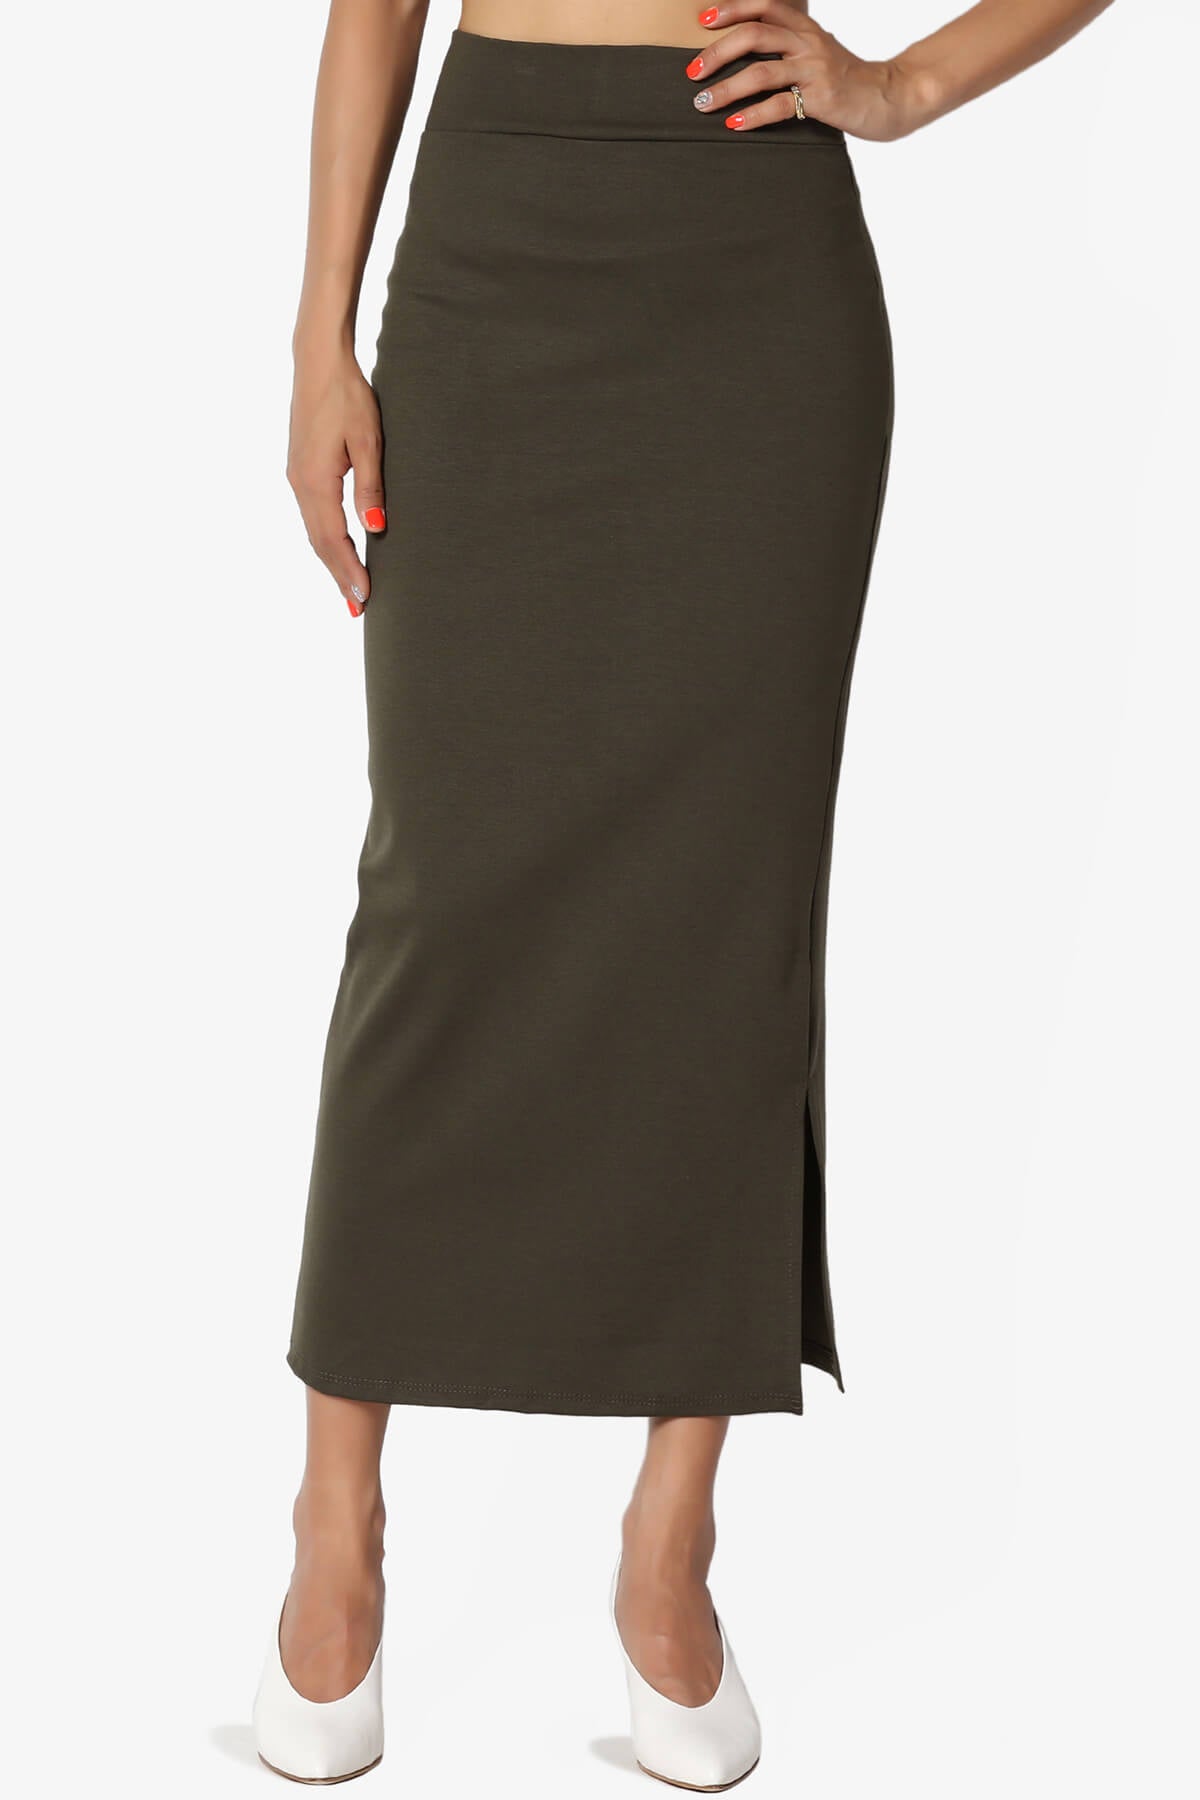 Carleta Mid Calf Pencil Skirt OLIVE_1